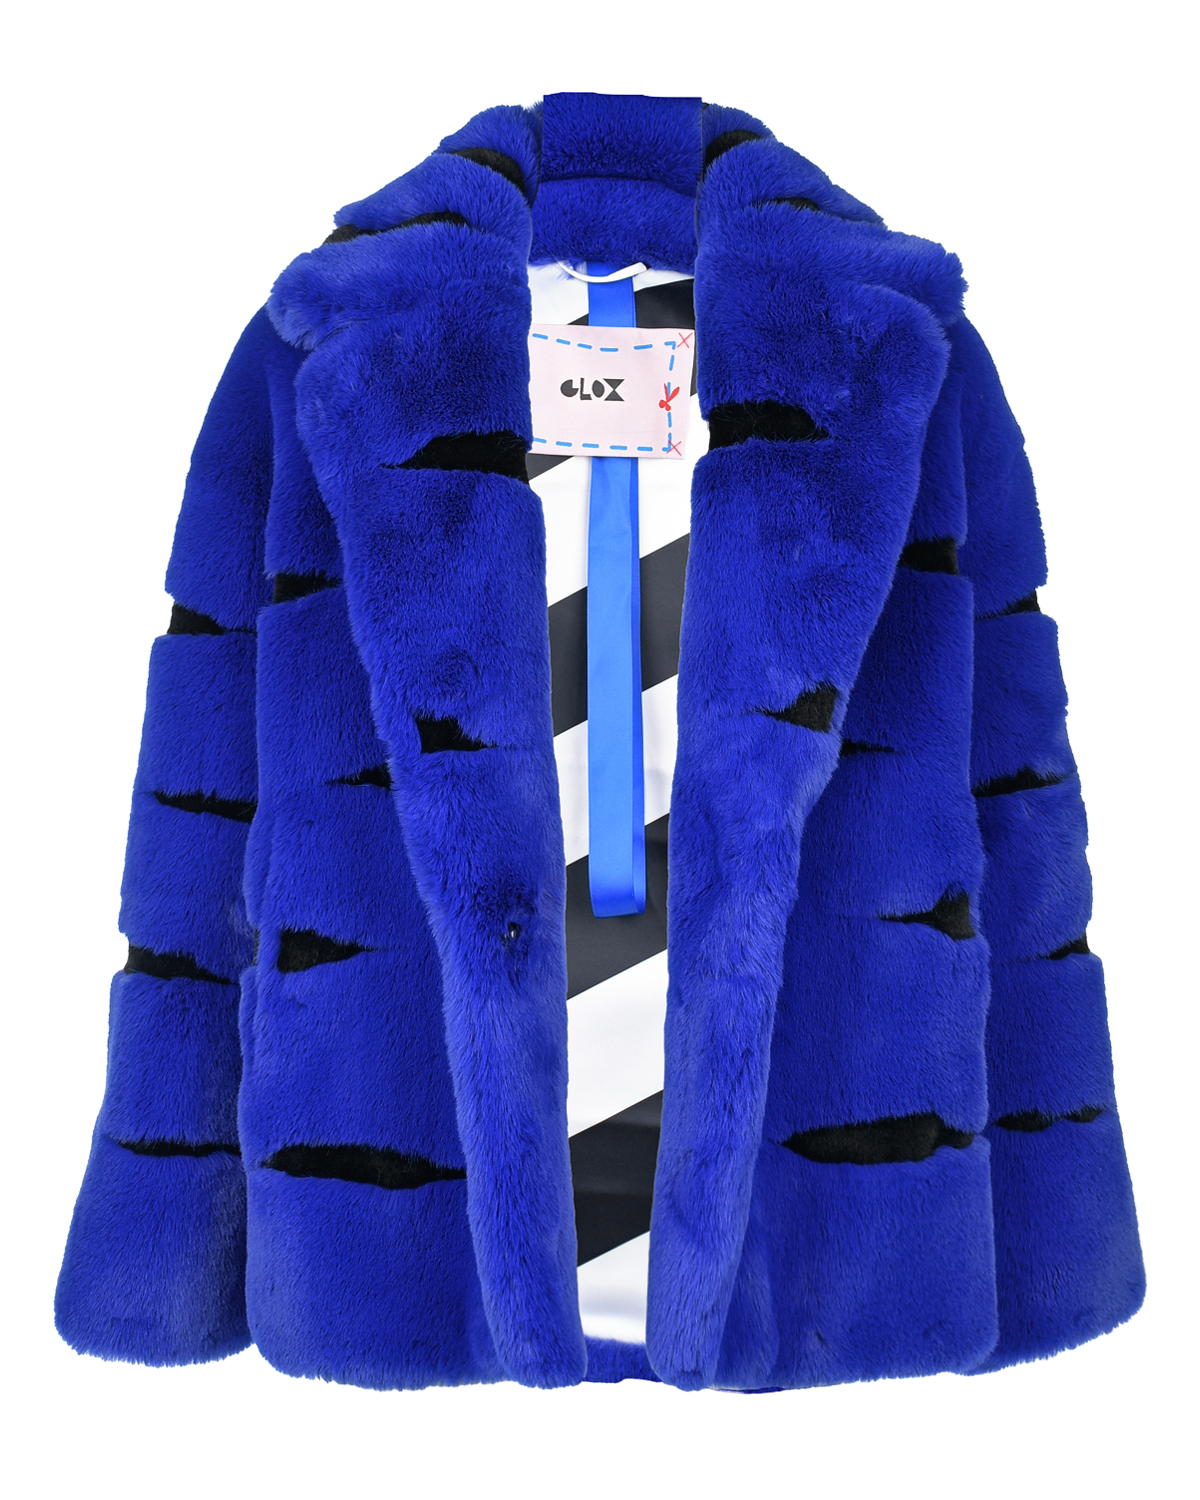 Синяя куртка из эко-меха Glox, размер 40, цвет синий - фото 3